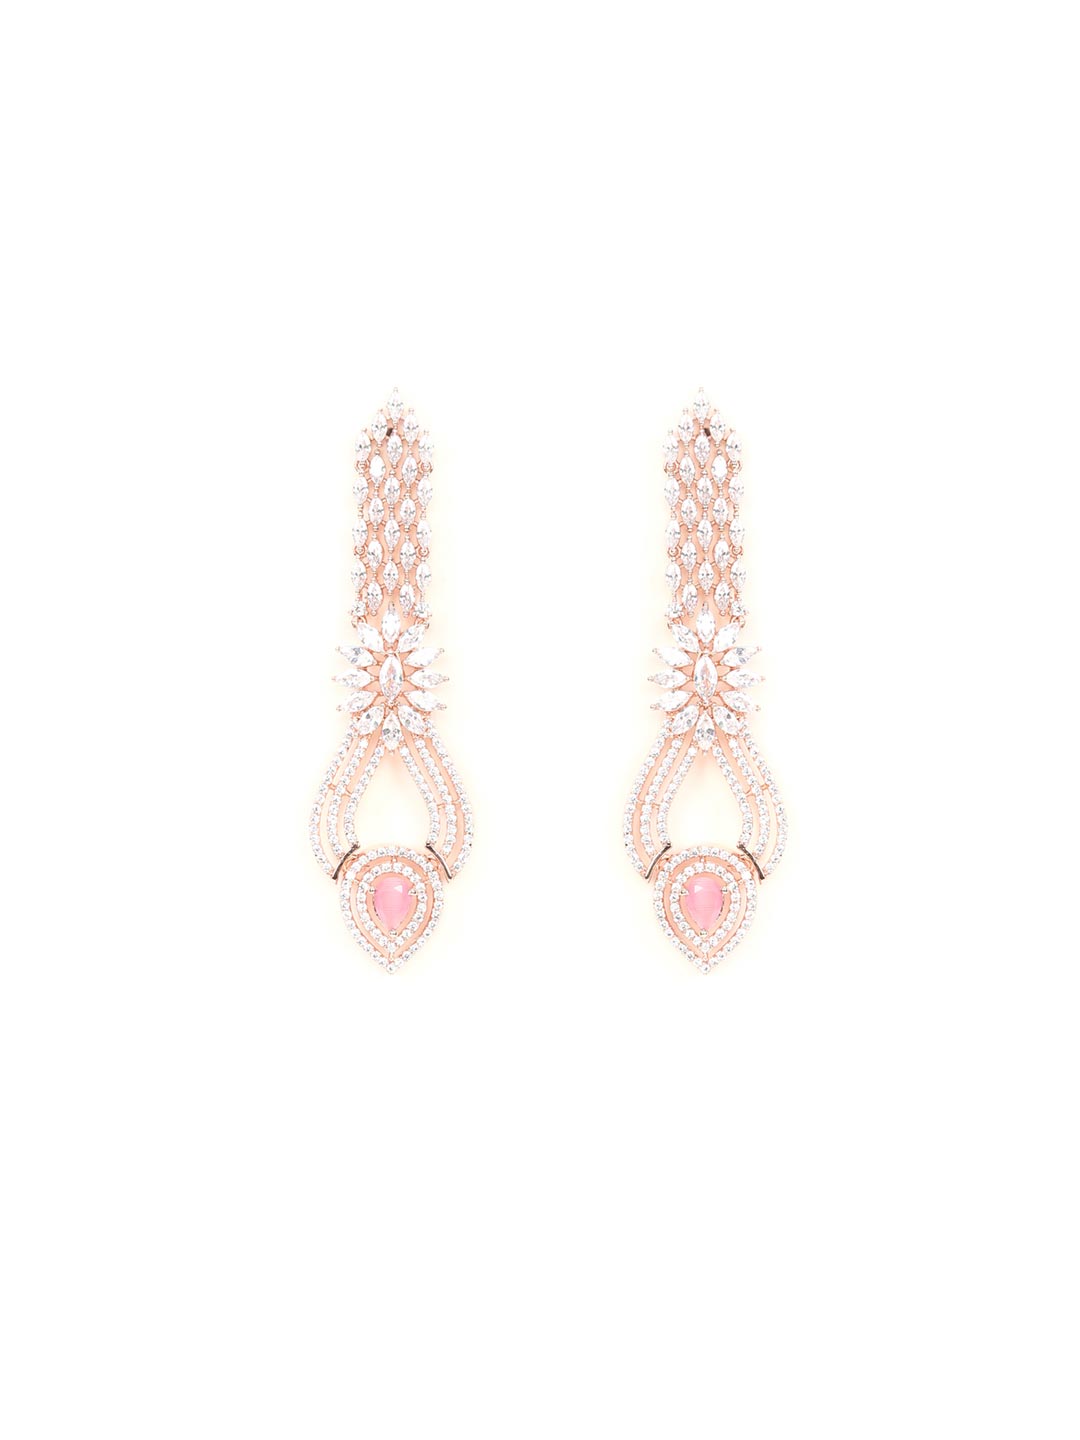 Darling Roseate-Pink Stones American Diamond Rose Gold Plated Drop Earring